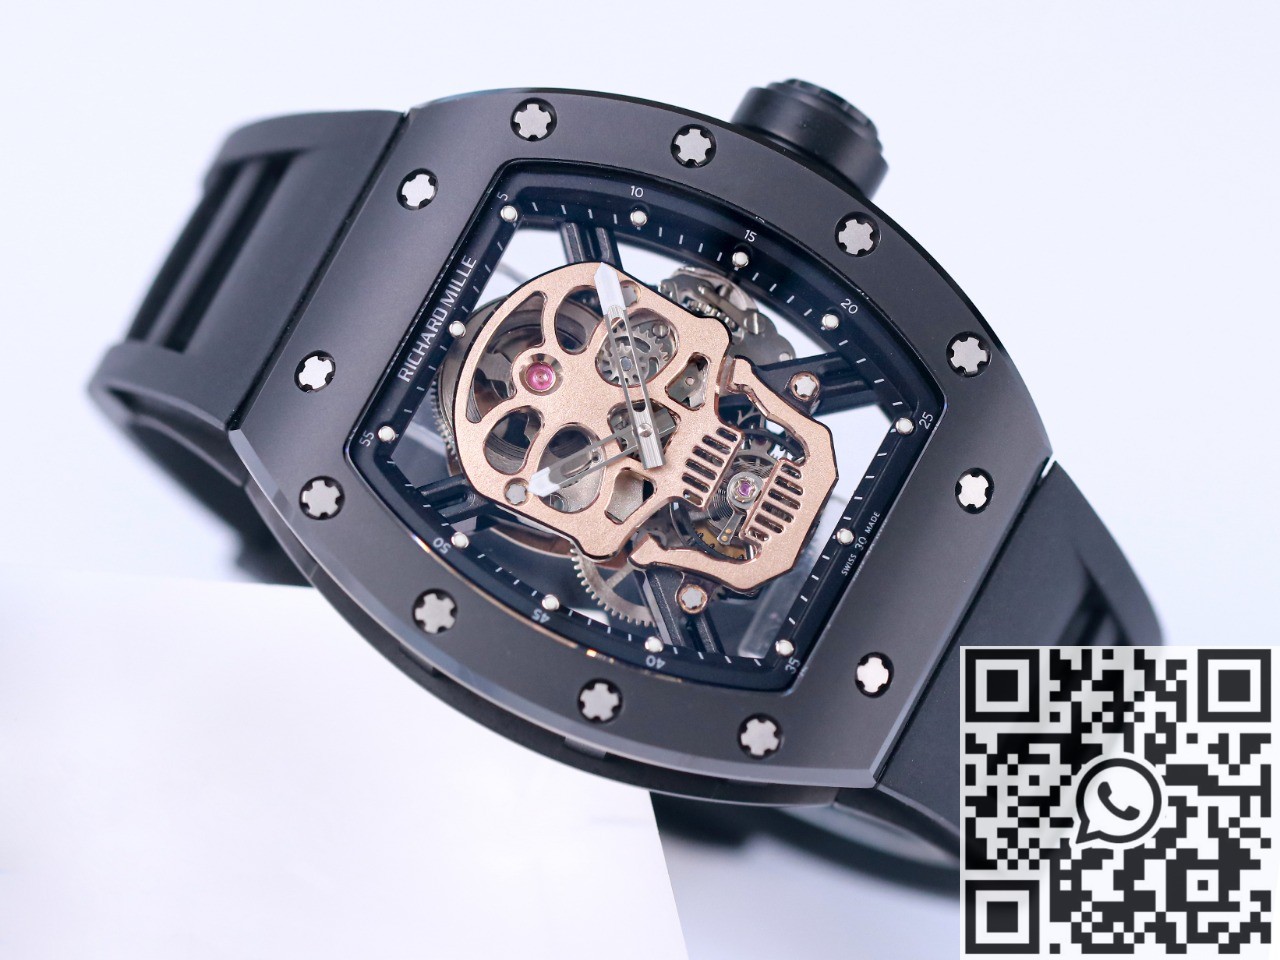 JB Factory Replica Richard Mille RM052 Rose Gold Skull Watch